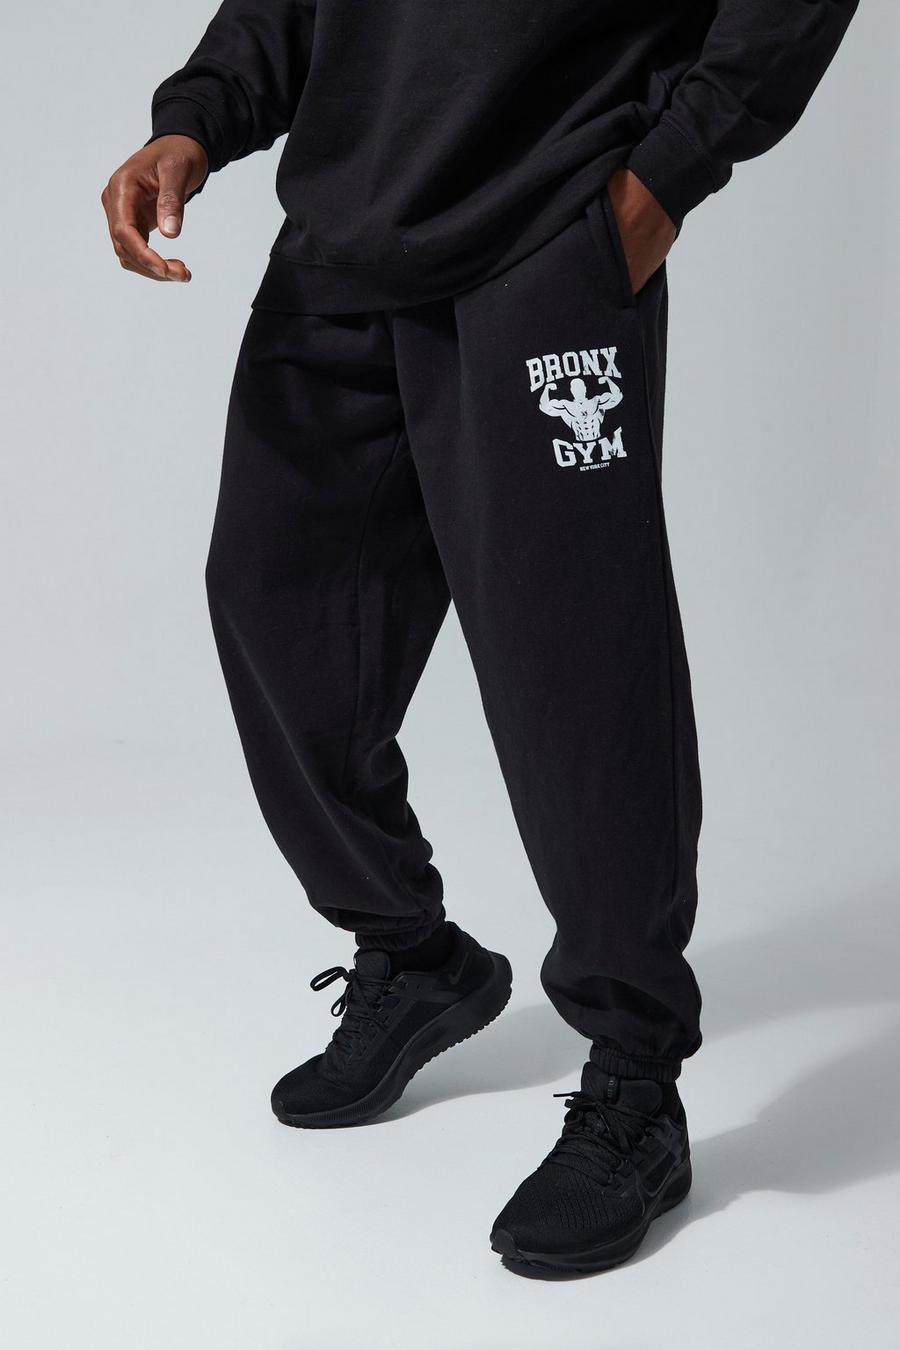 Pantaloni tuta oversize Man Active Bronx Gym, Black